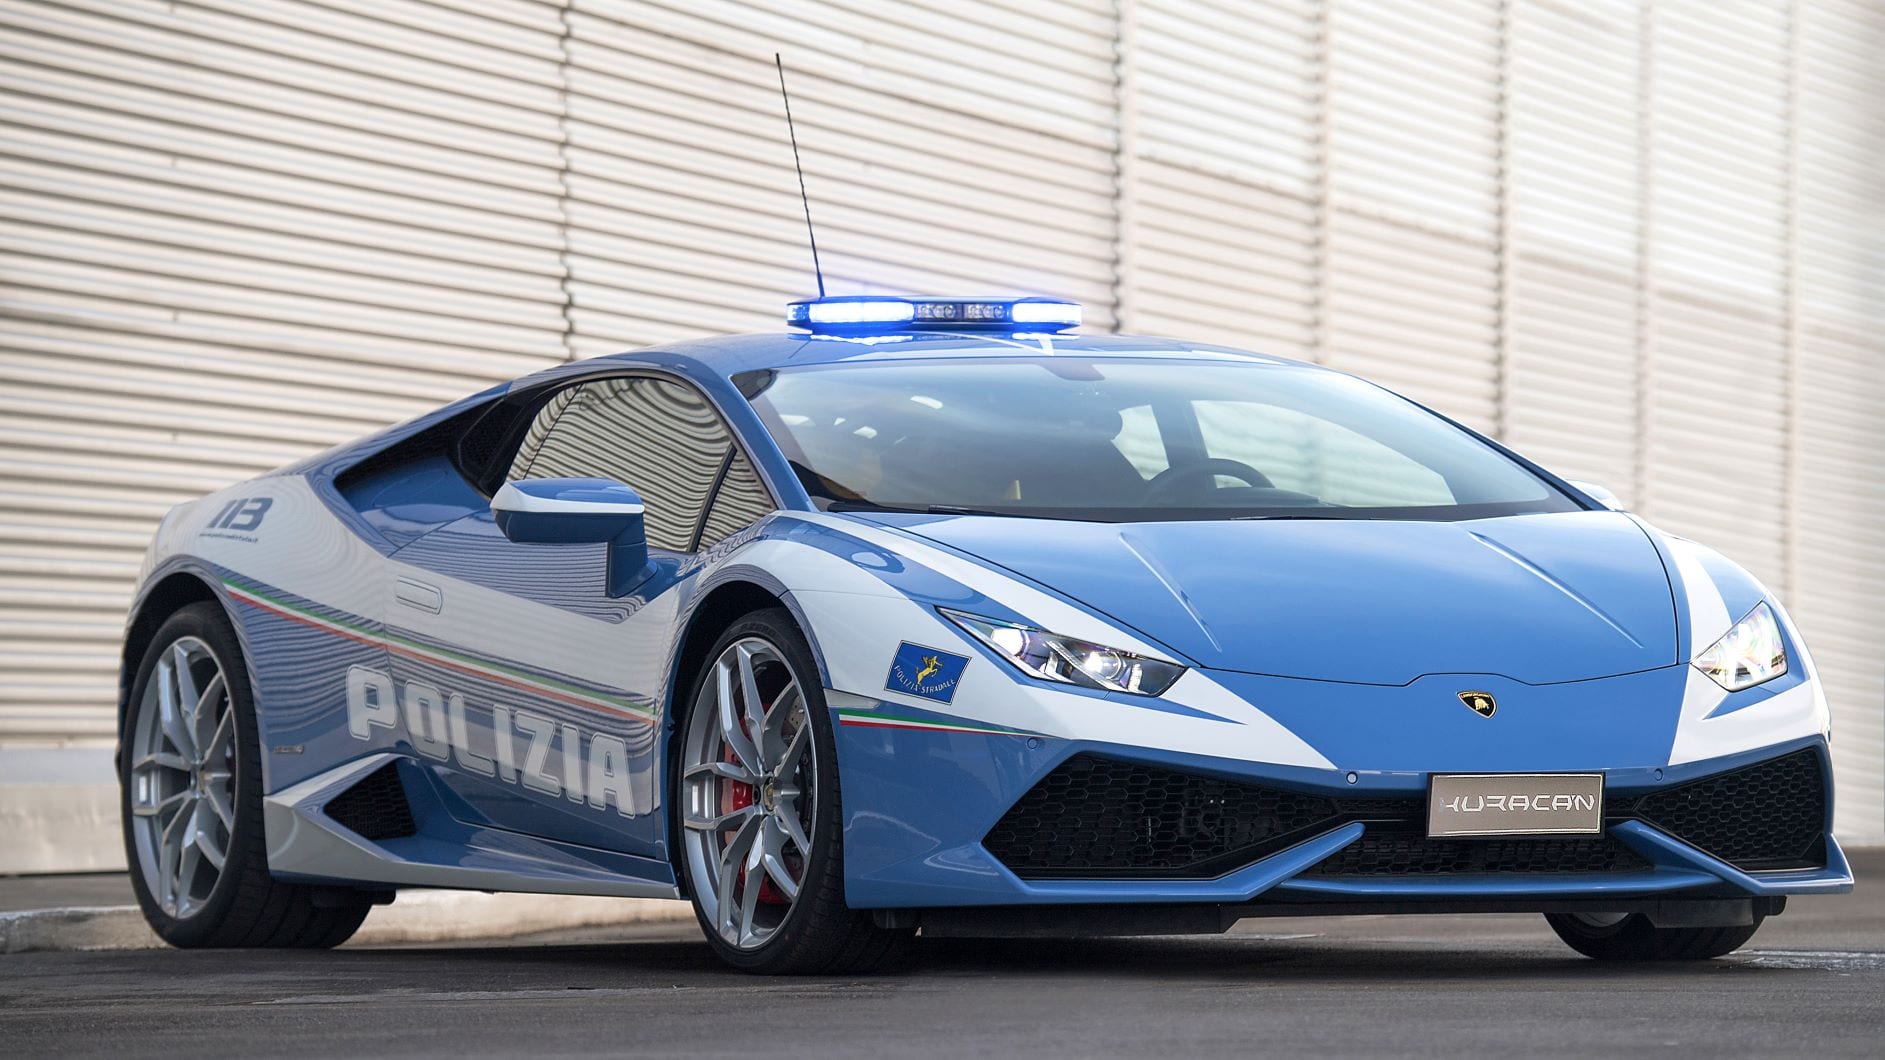 A Lamborghini Huracan police car